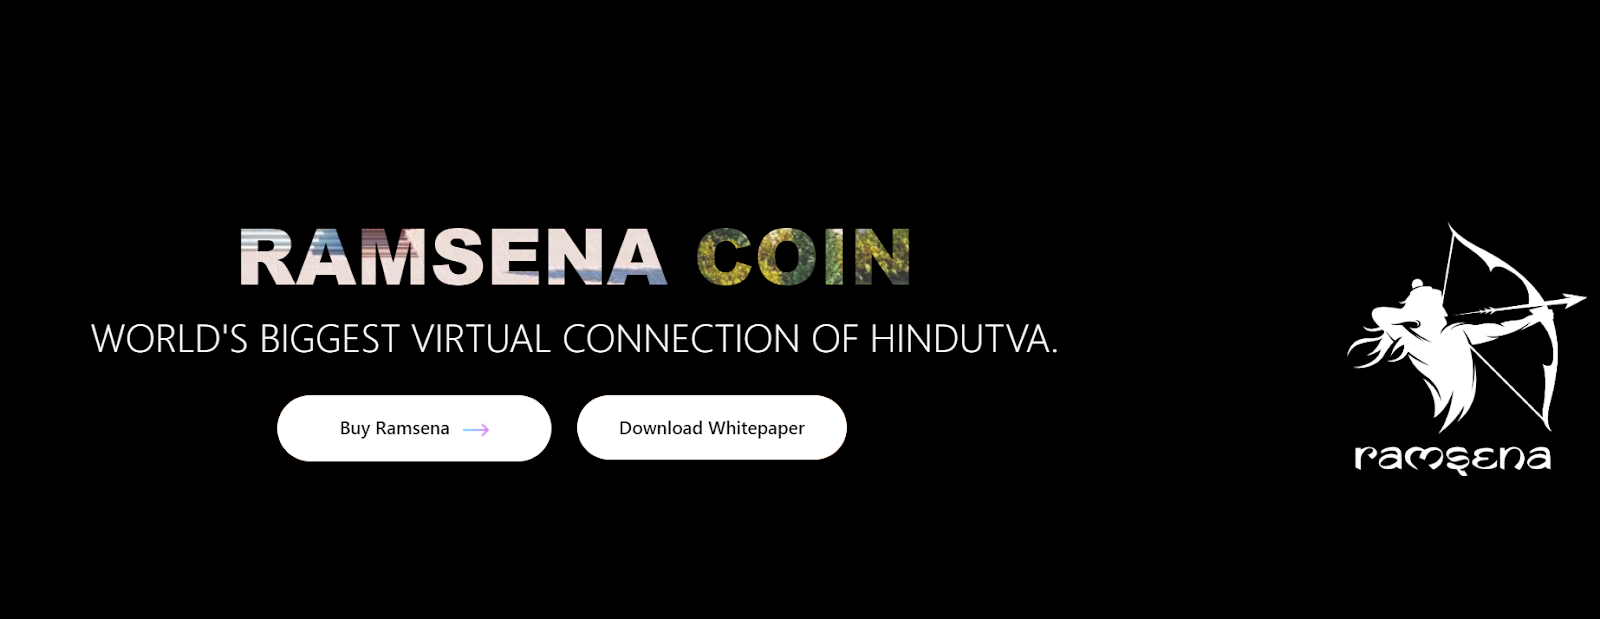 Ramesena Coin: Uniting the Global Hindu Community Through Blockchain Innovation